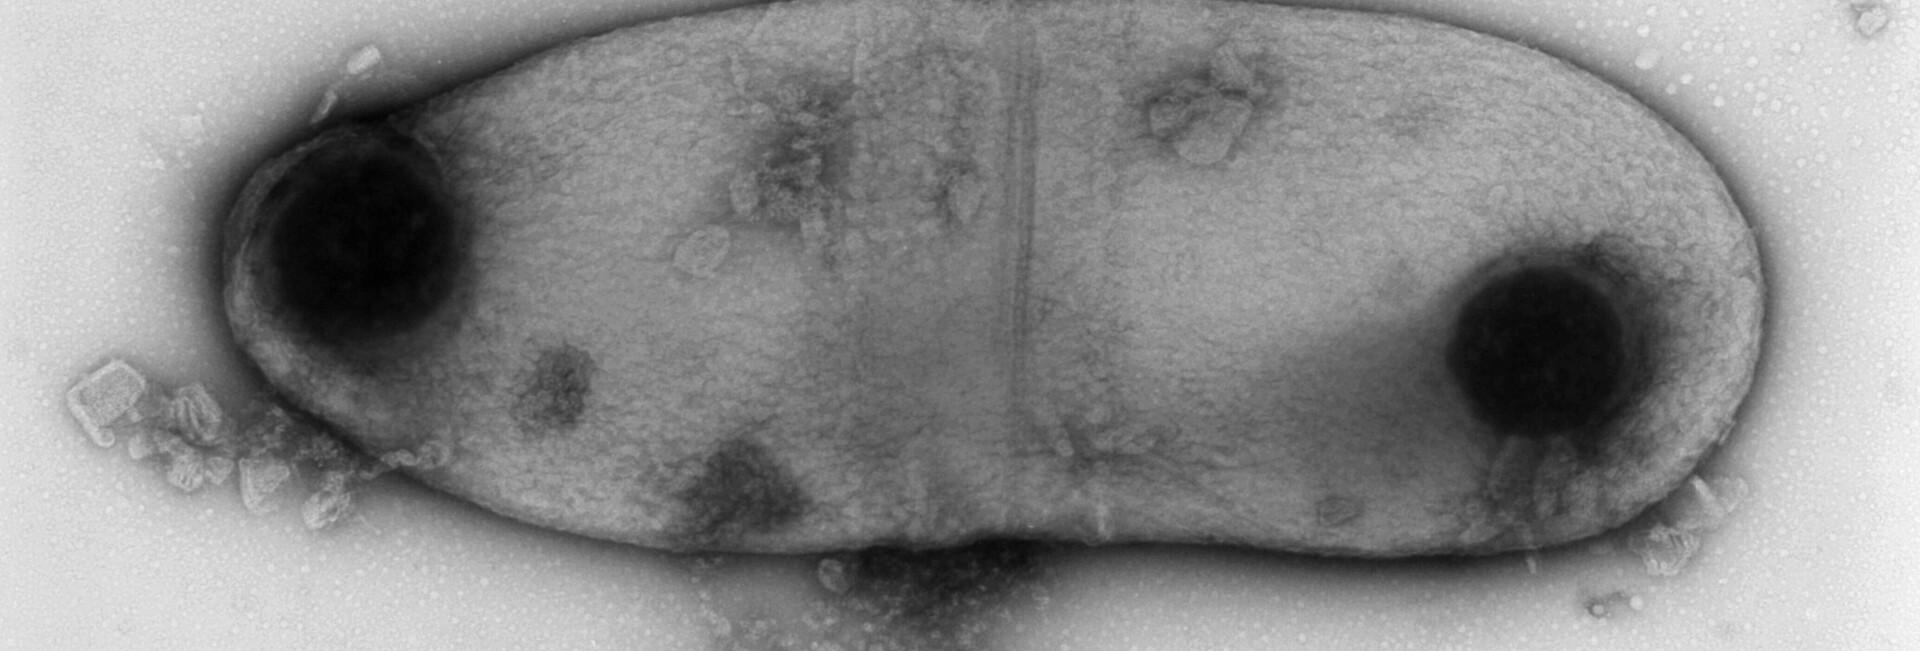 Mikroskopische Aufnahme des Diphtherie-Erregers